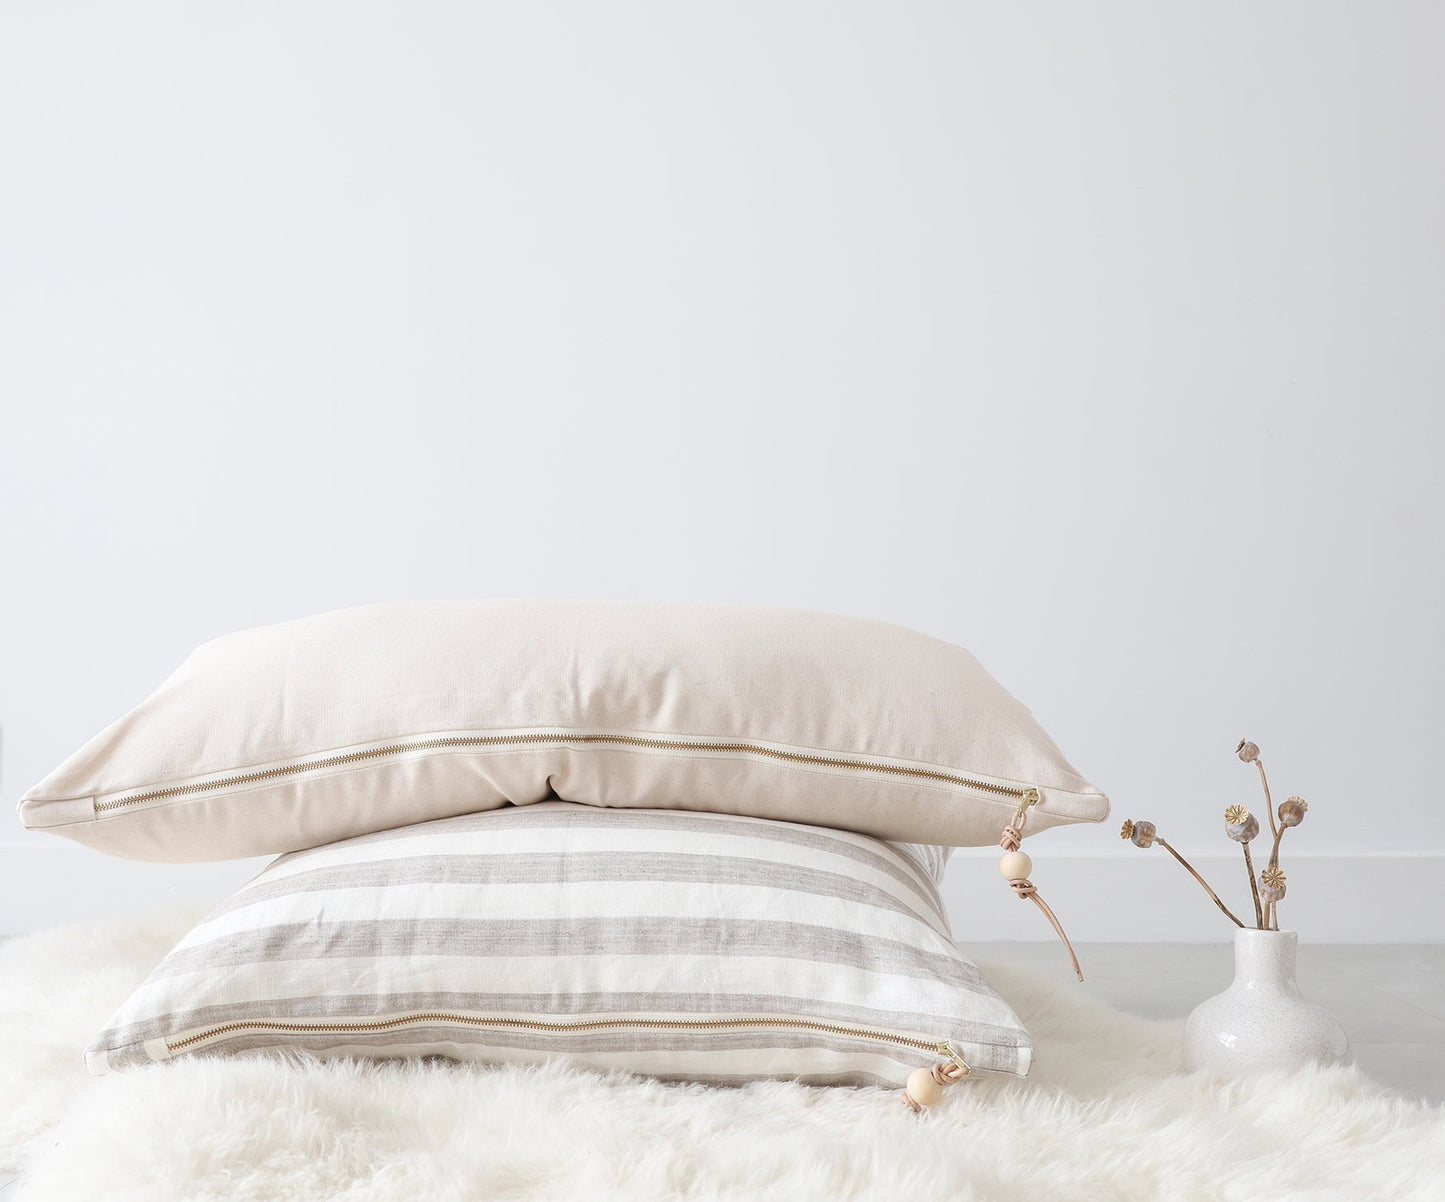 Pure Stripes- Linen Floor Pillow - celina mancurti - pillow - Cover + Insert - -Family-friendly pillow